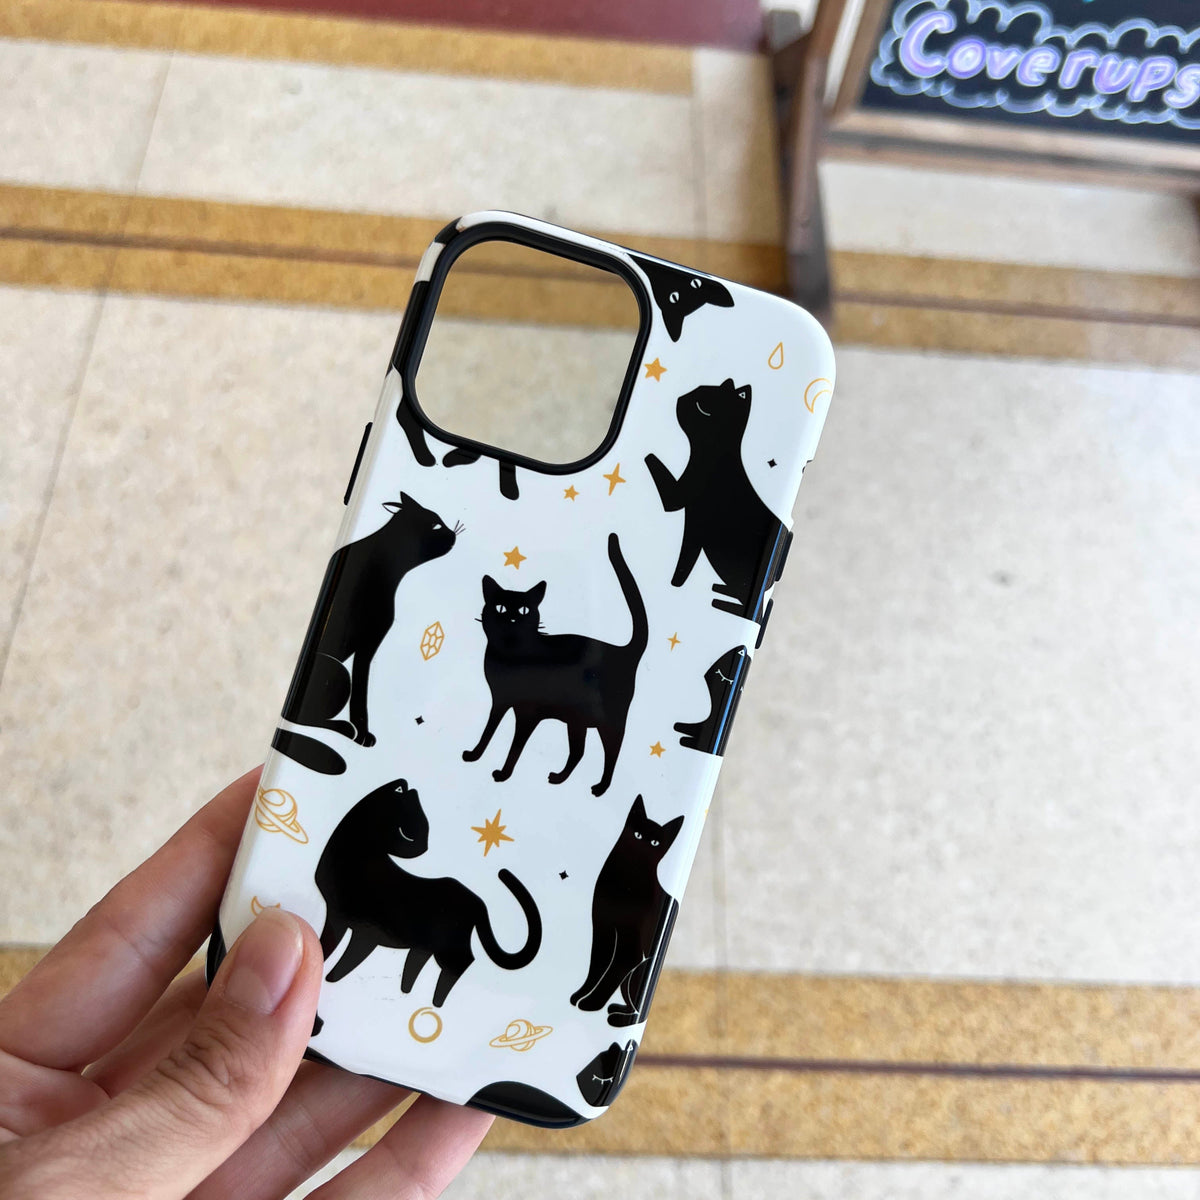 Black Cats iPhone Case - iPhone 11 Pro